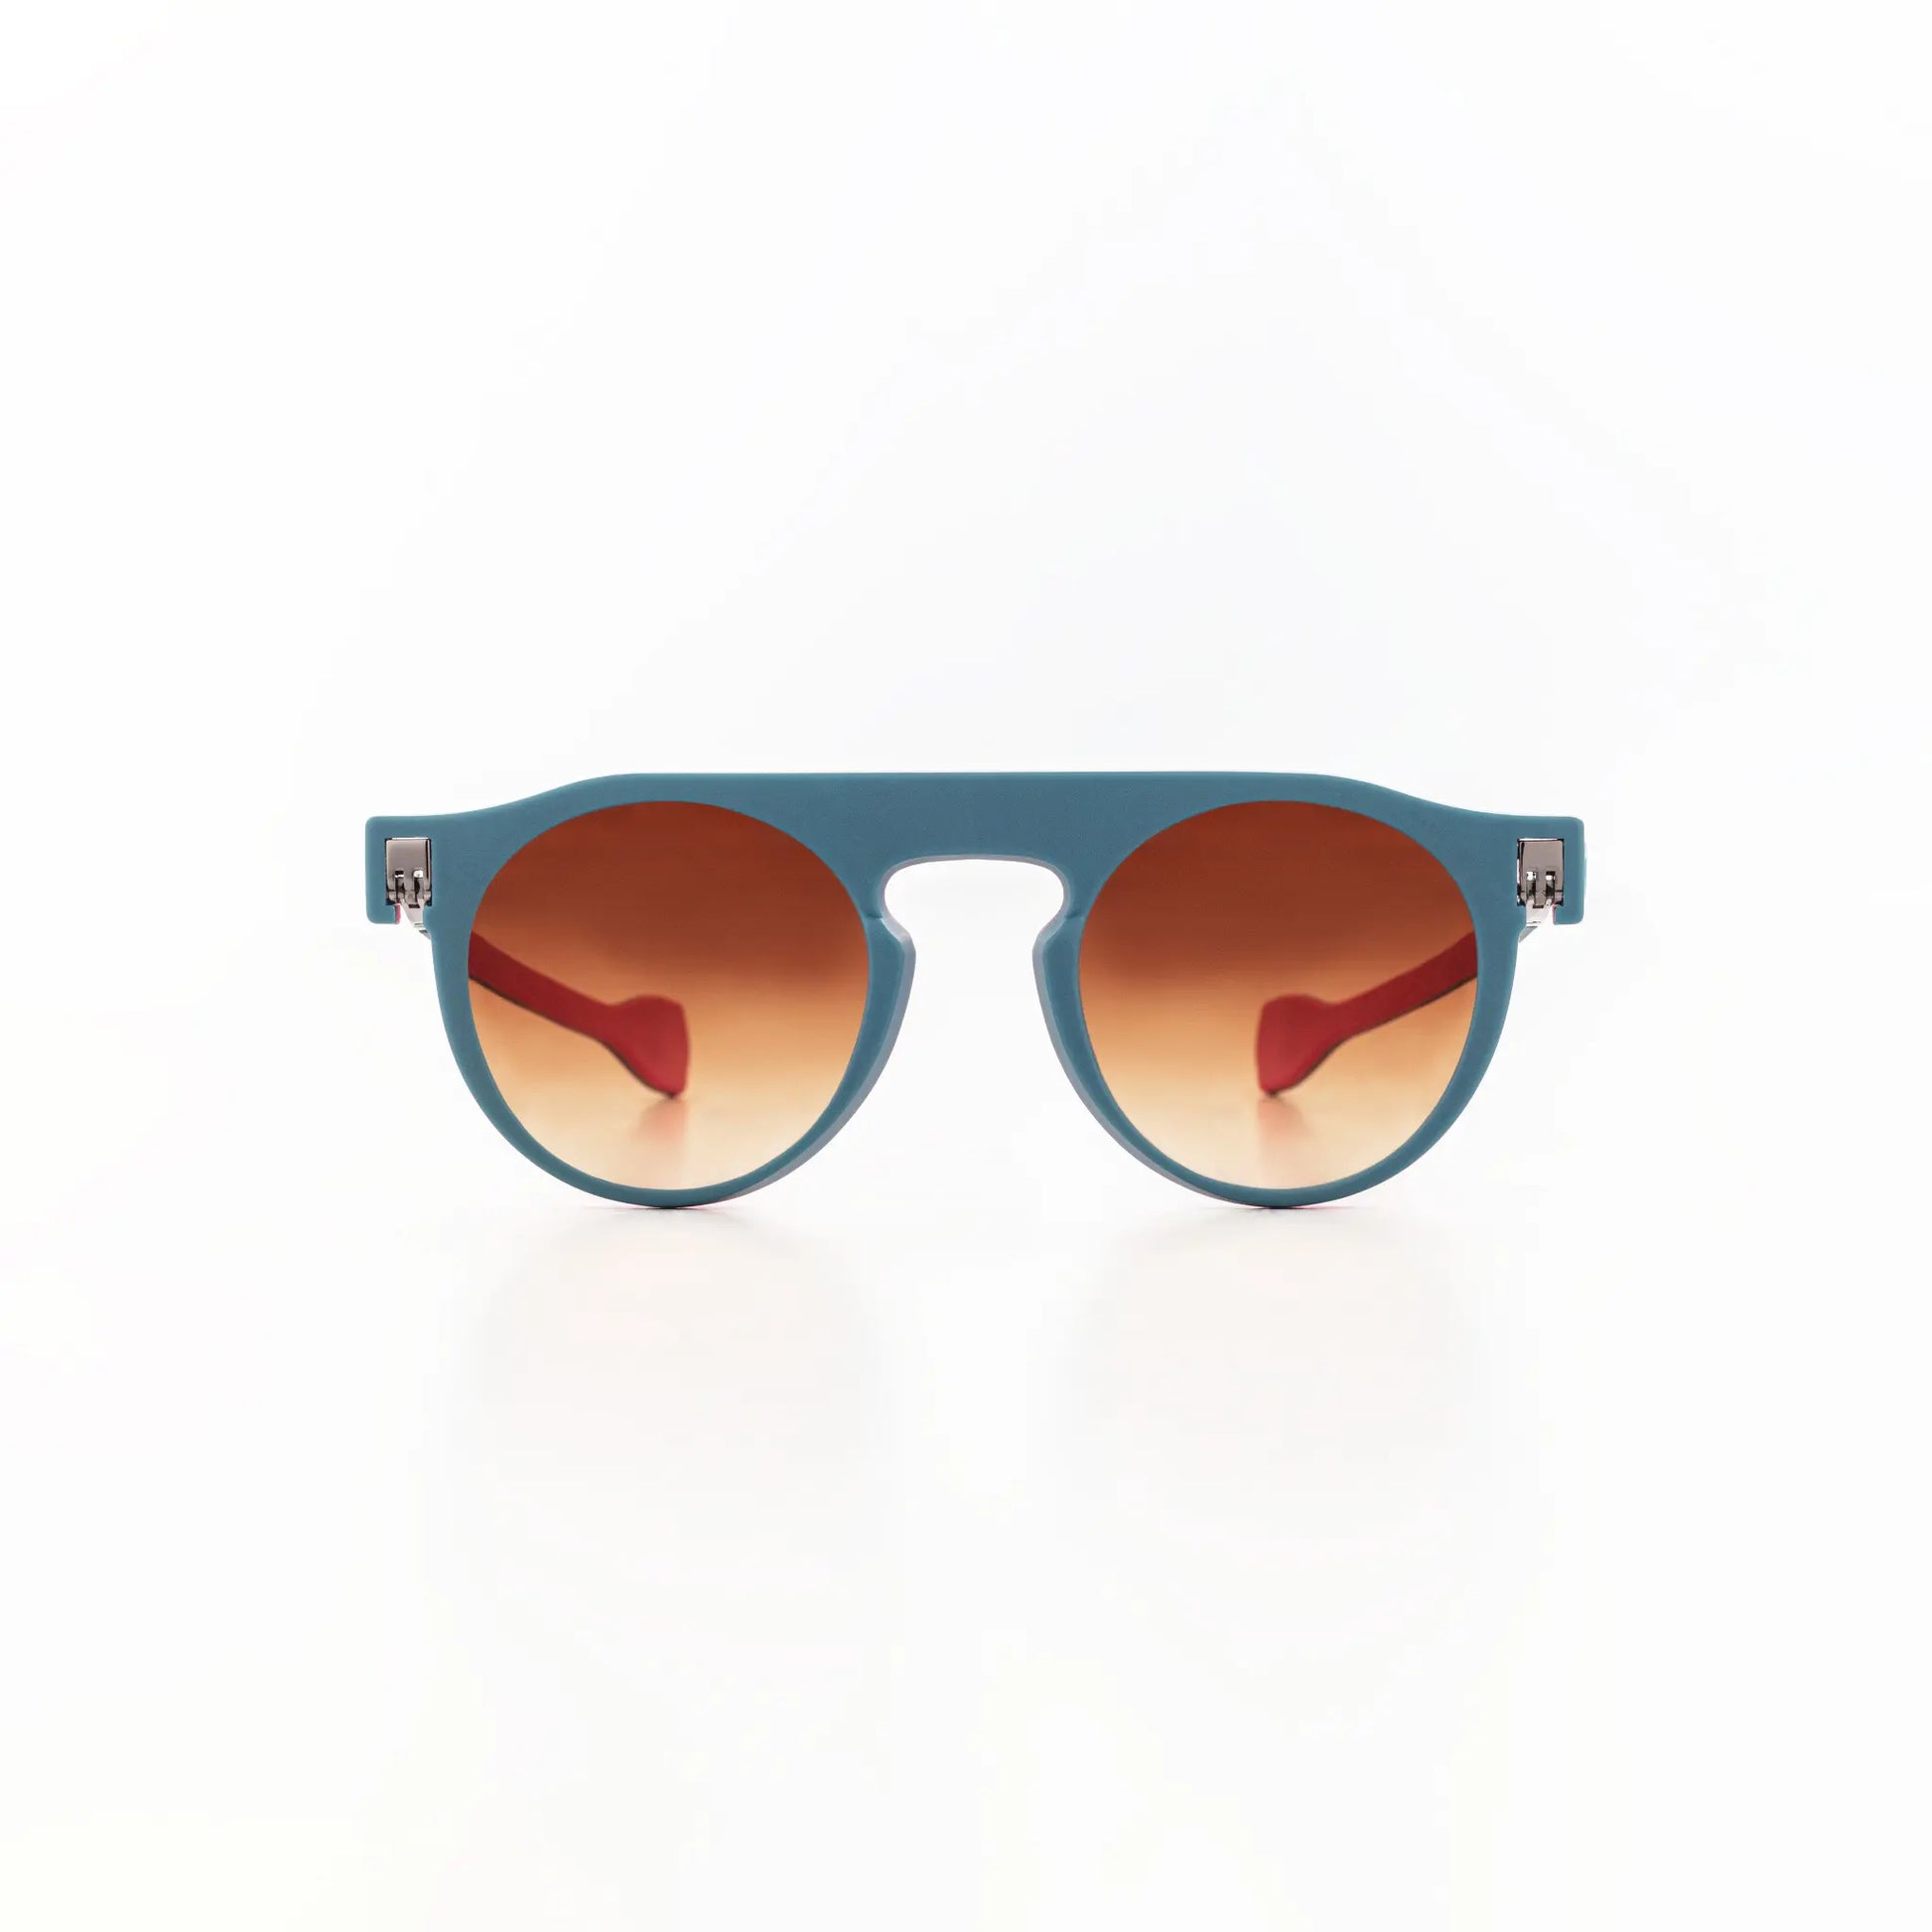 Reverso sunglasses pink & petrol reversible & ultra light front view 2